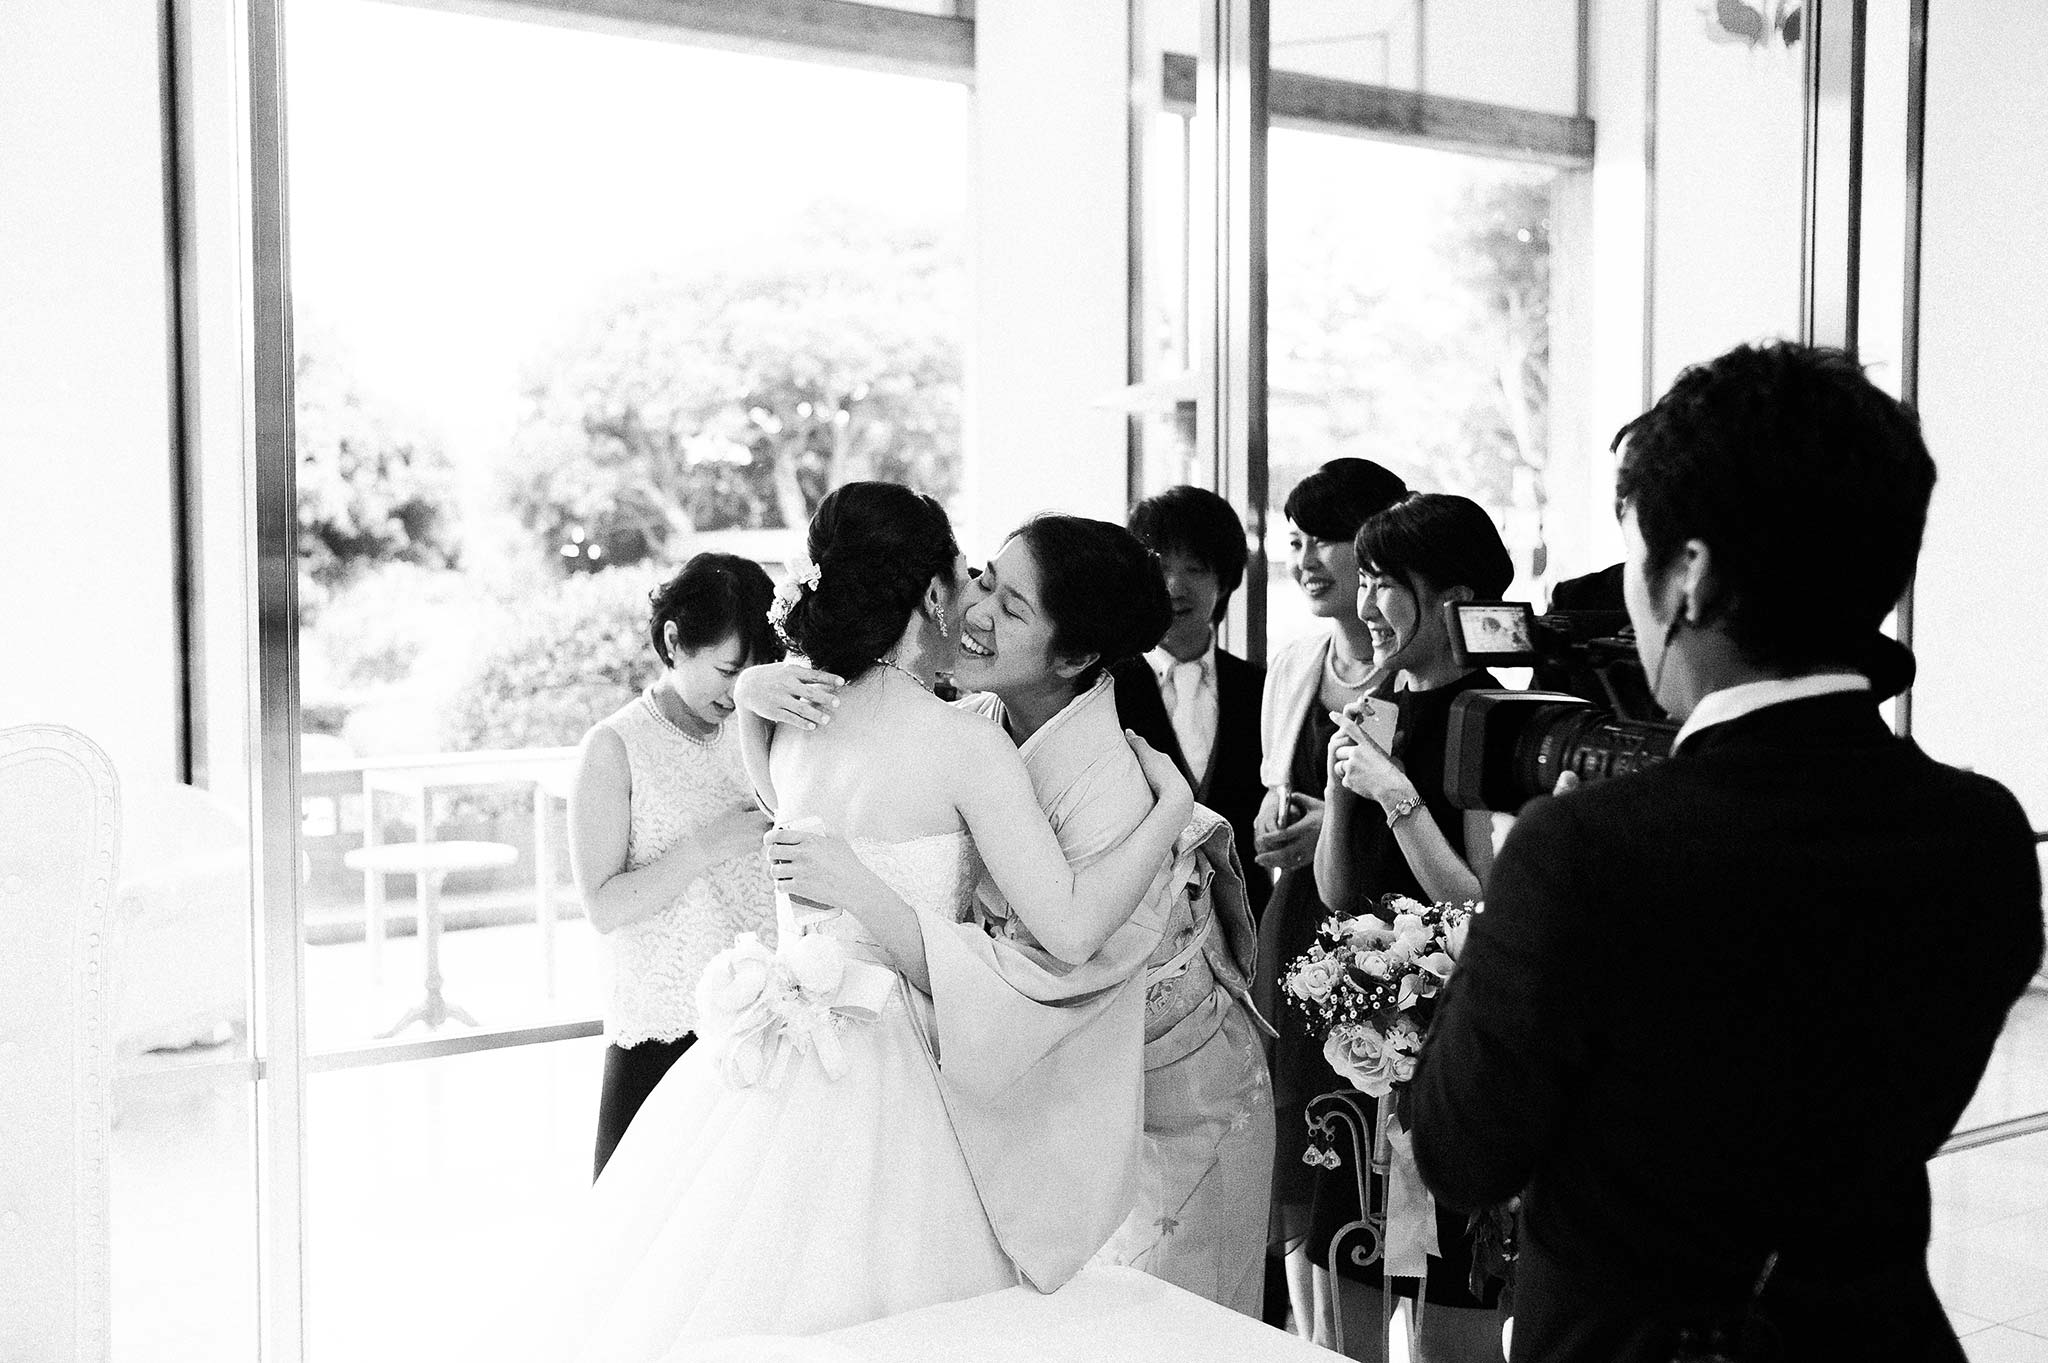 Osaka-Banpaku-Geihinkan-Wedding-reception-guests